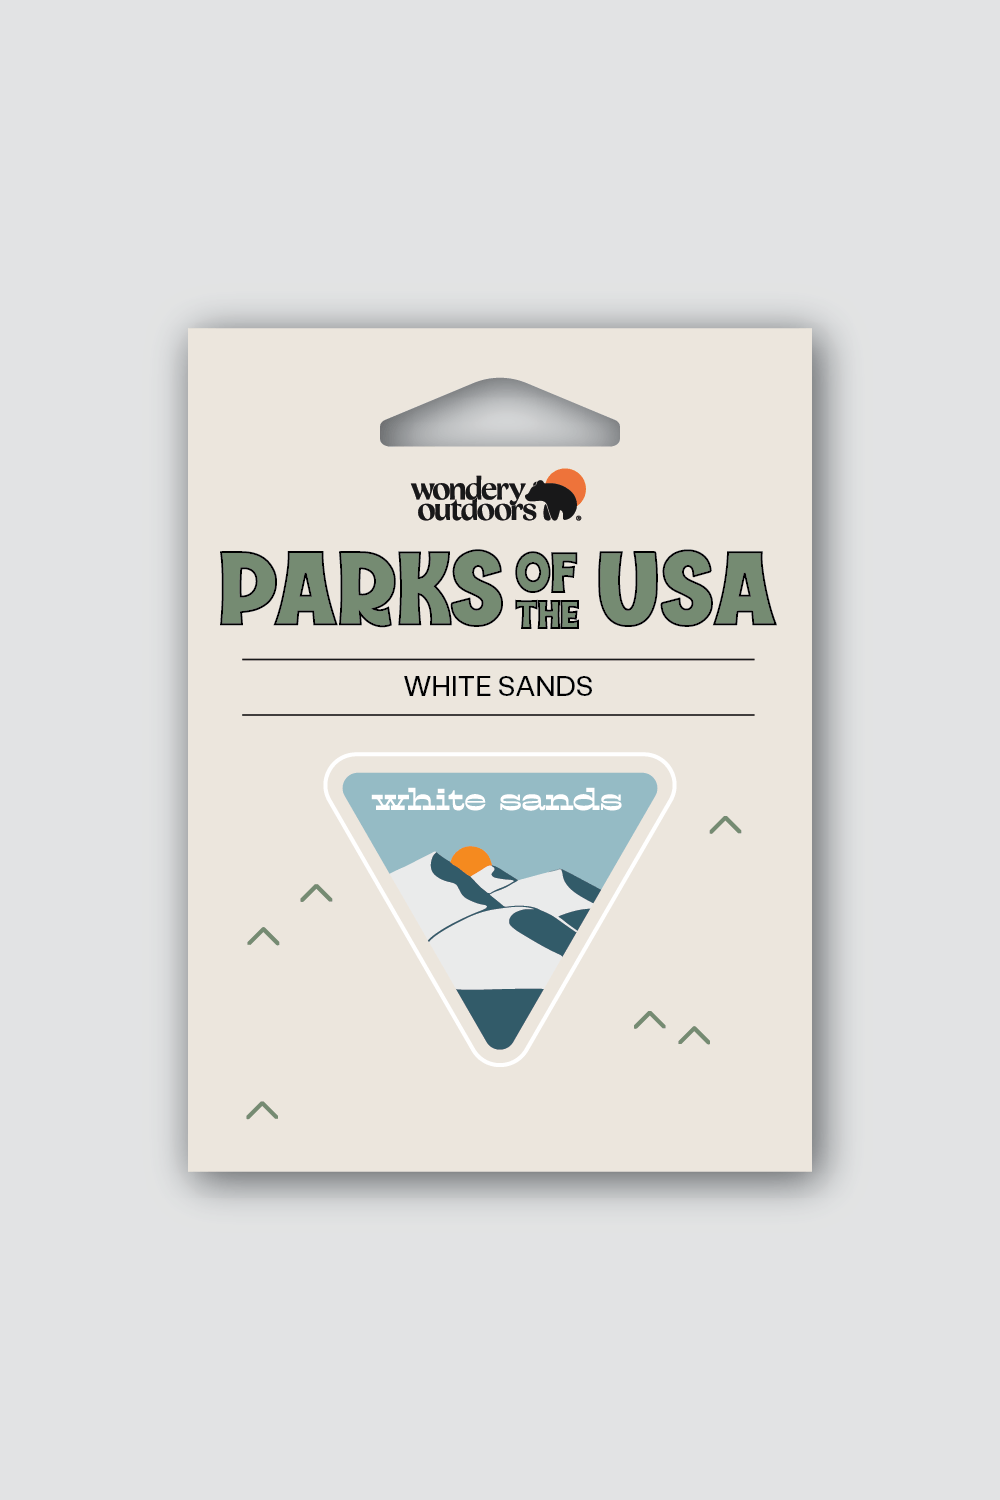 #national park_white sands _USA National Parks souvenir sticker gift sets